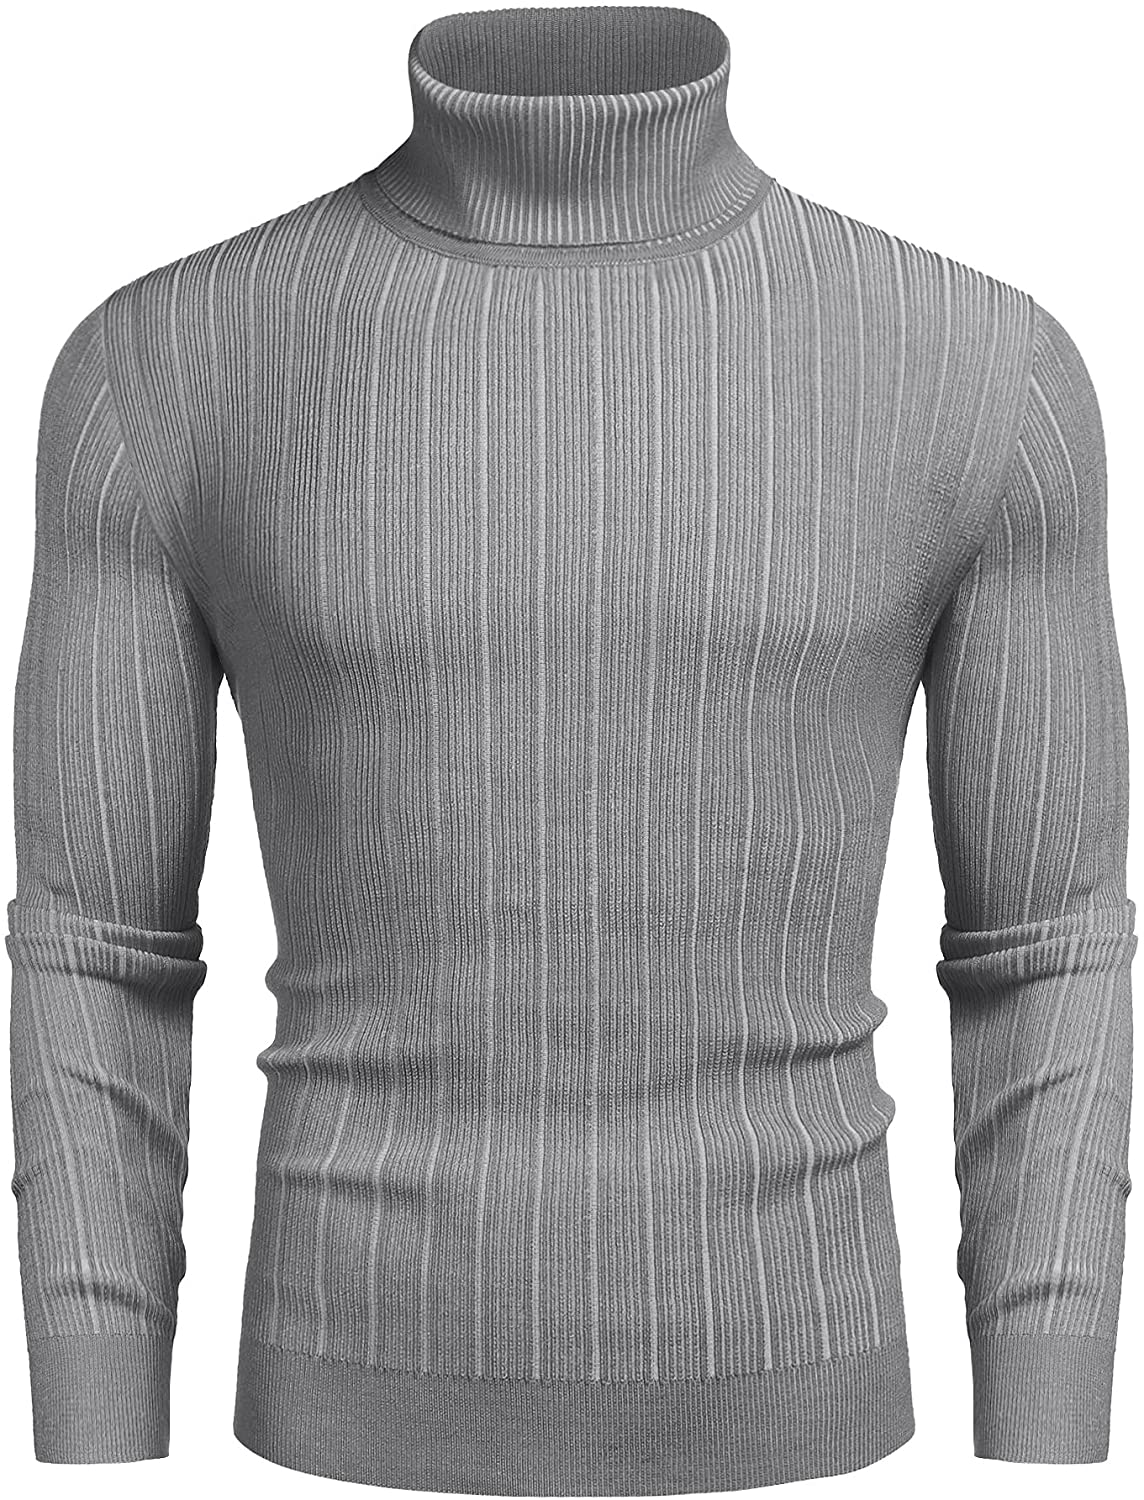 COOFANDY Men's Slim Fit Turtleneck Sweater Ribbed High Neck